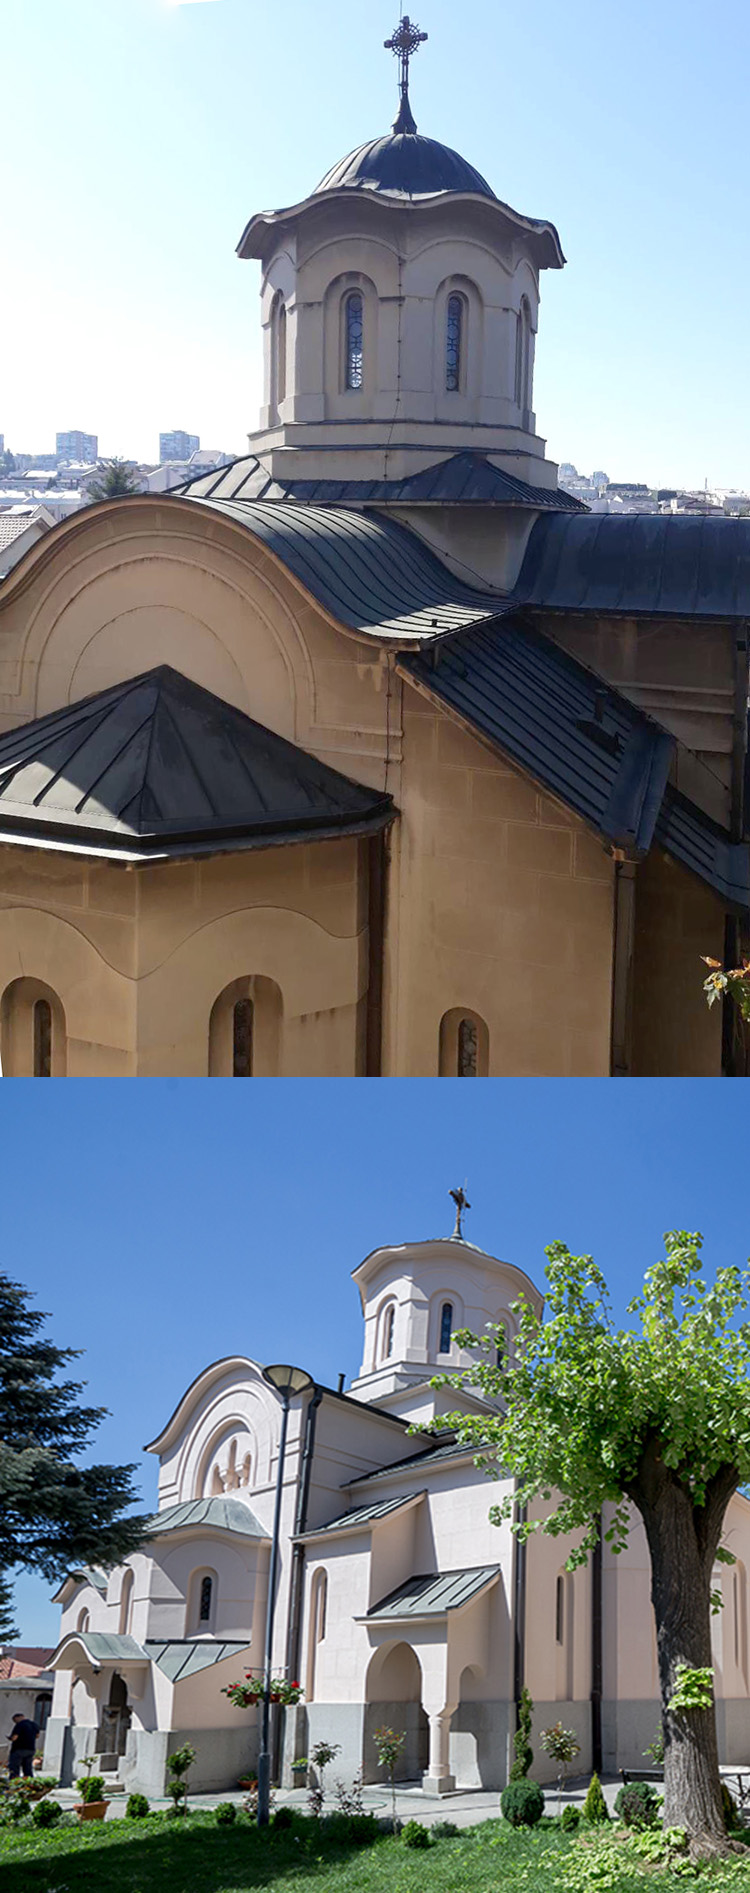 fasaderski-radovi-rekonstrukcija-fasade-crkva-merge2.jpg